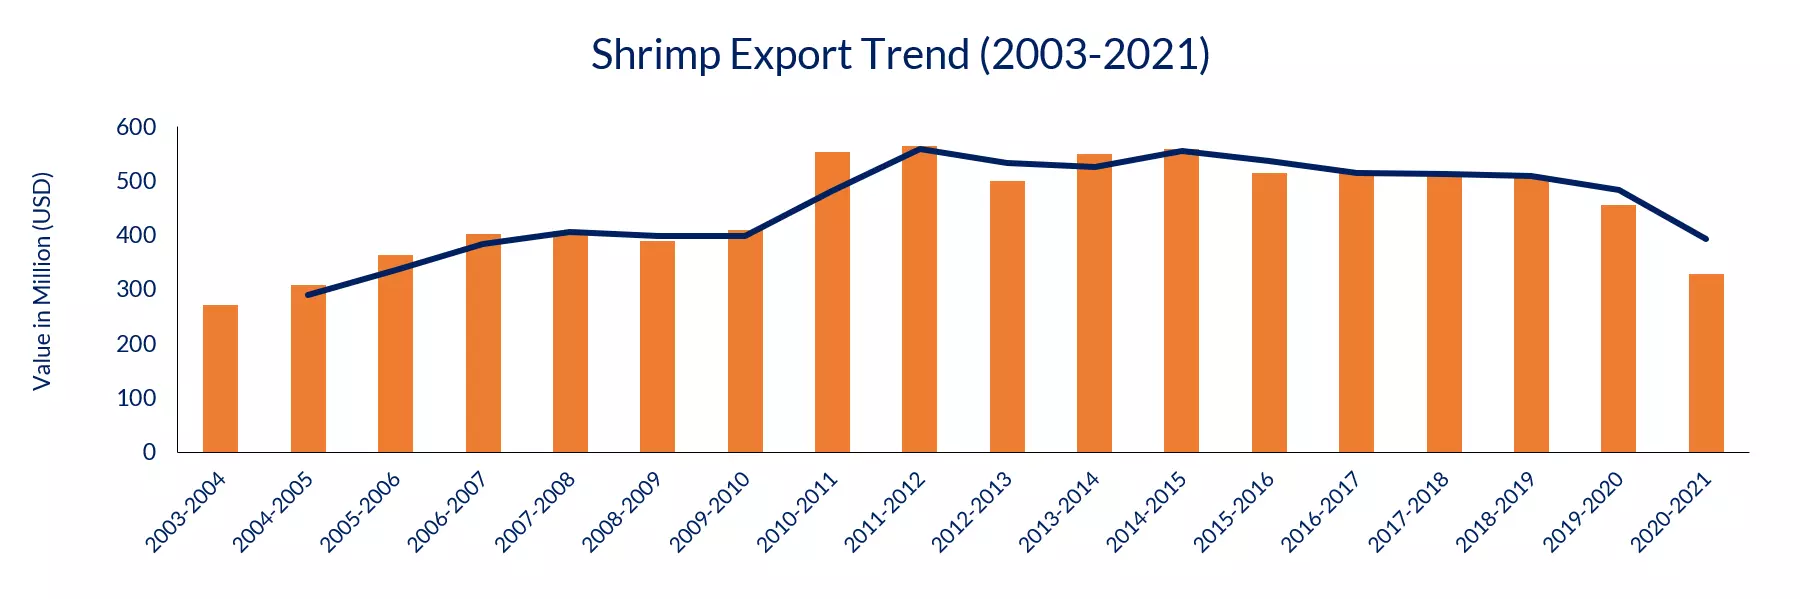  Fisheries Statistical Yearbook (2019), EPB: Shrimp Export Trend (2003-2021)